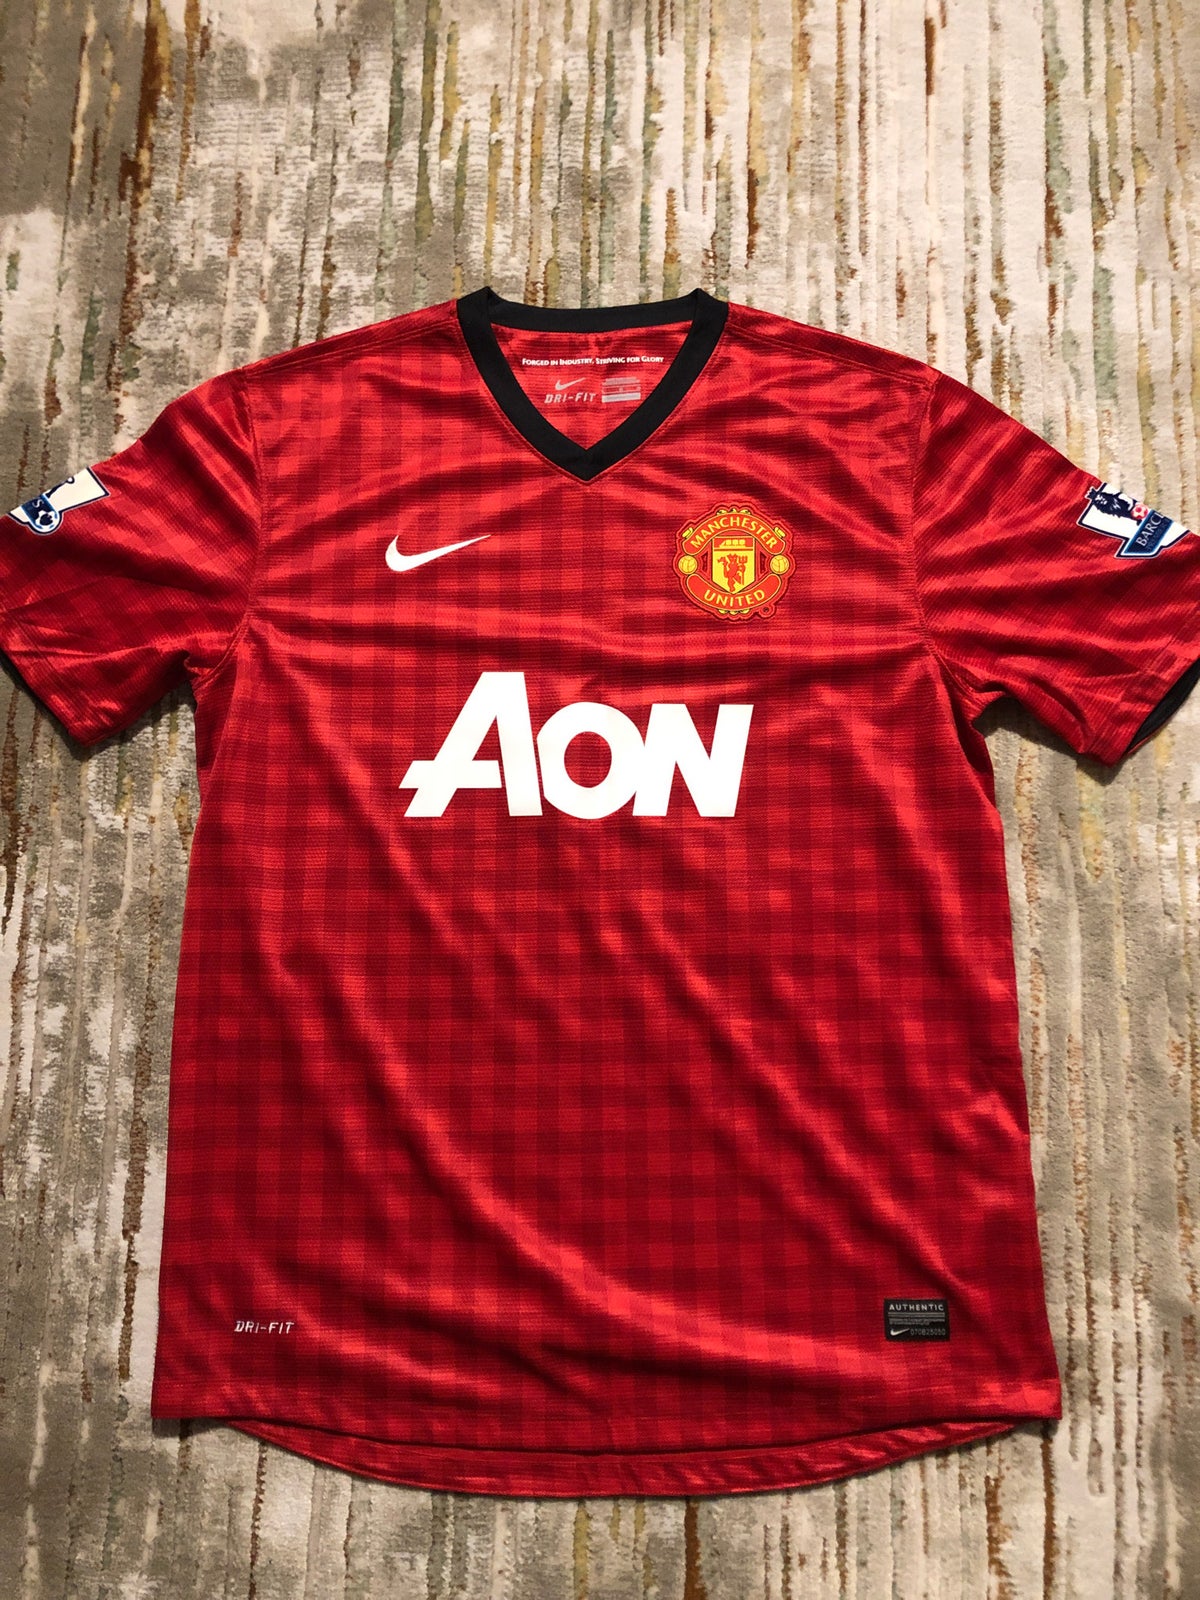 Fodboldtrøje, Manchester United RVP, Nike